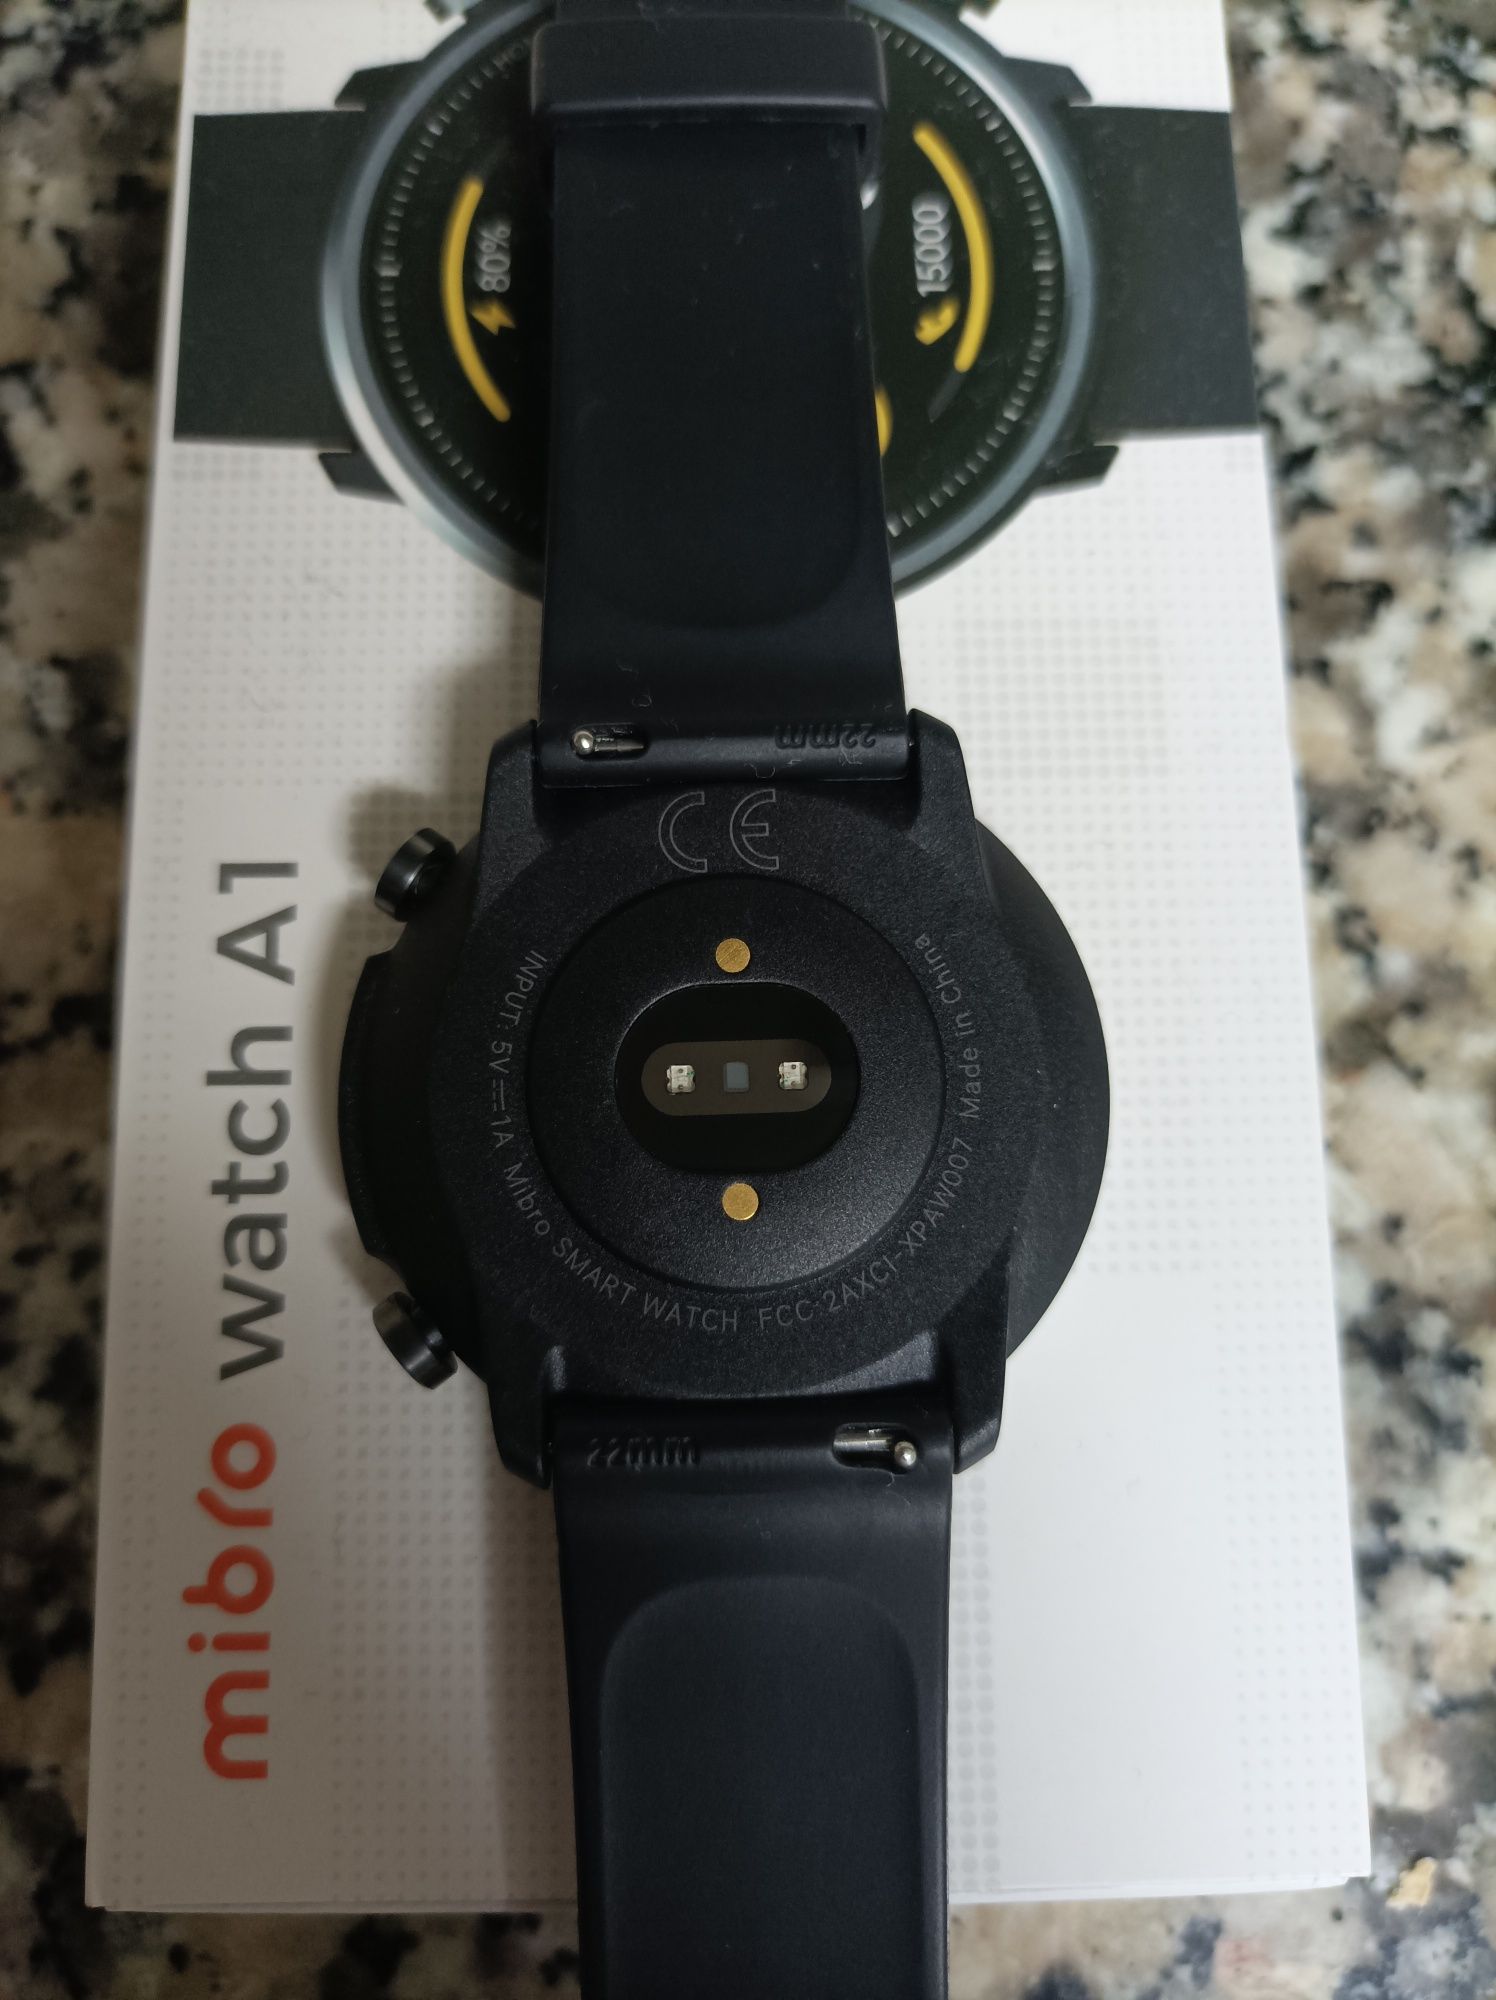 Smartwatch mibro watch A1